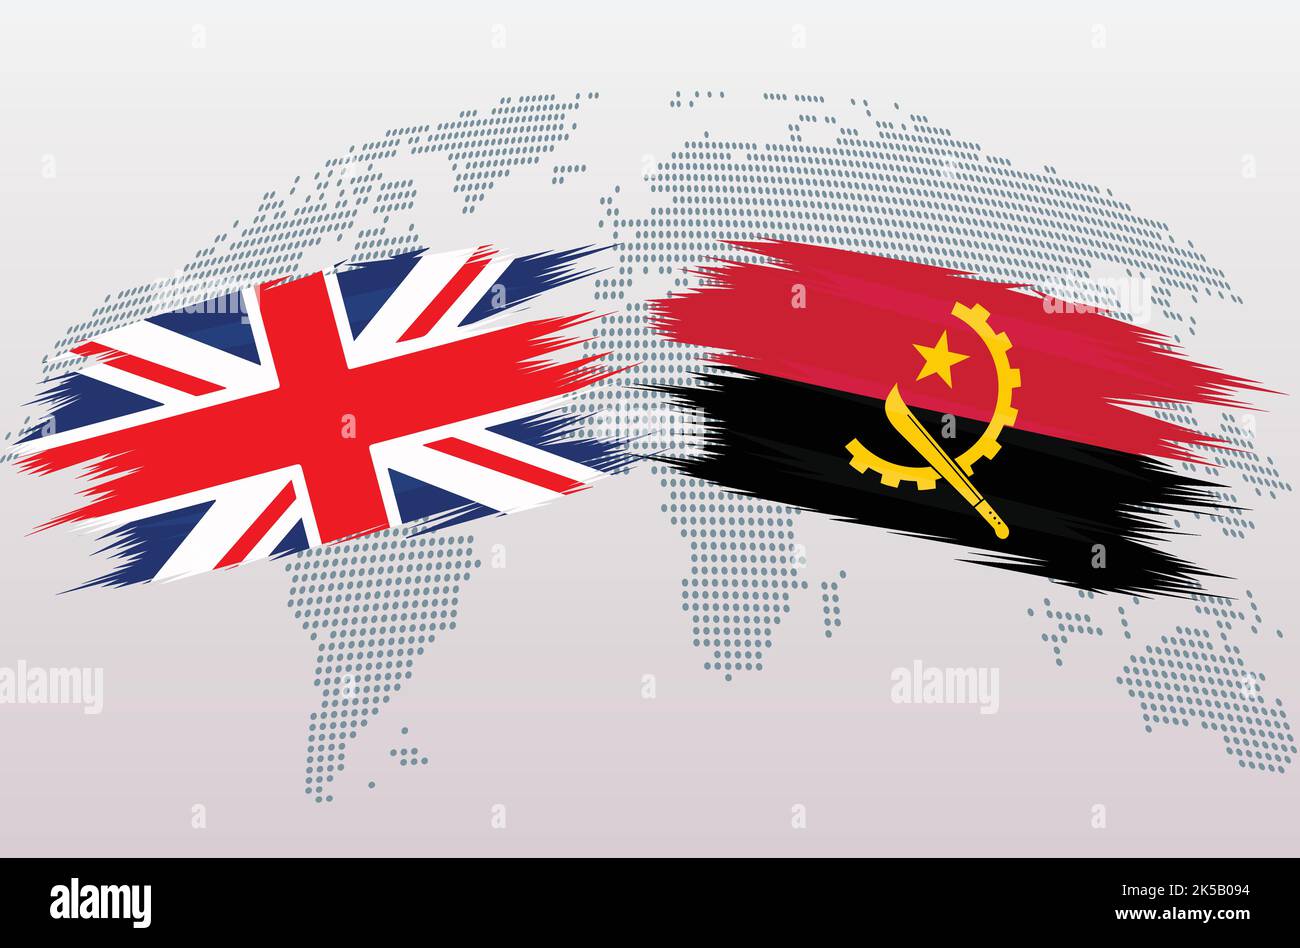 Sticker drapeau Angola – Drapeaux du Monde